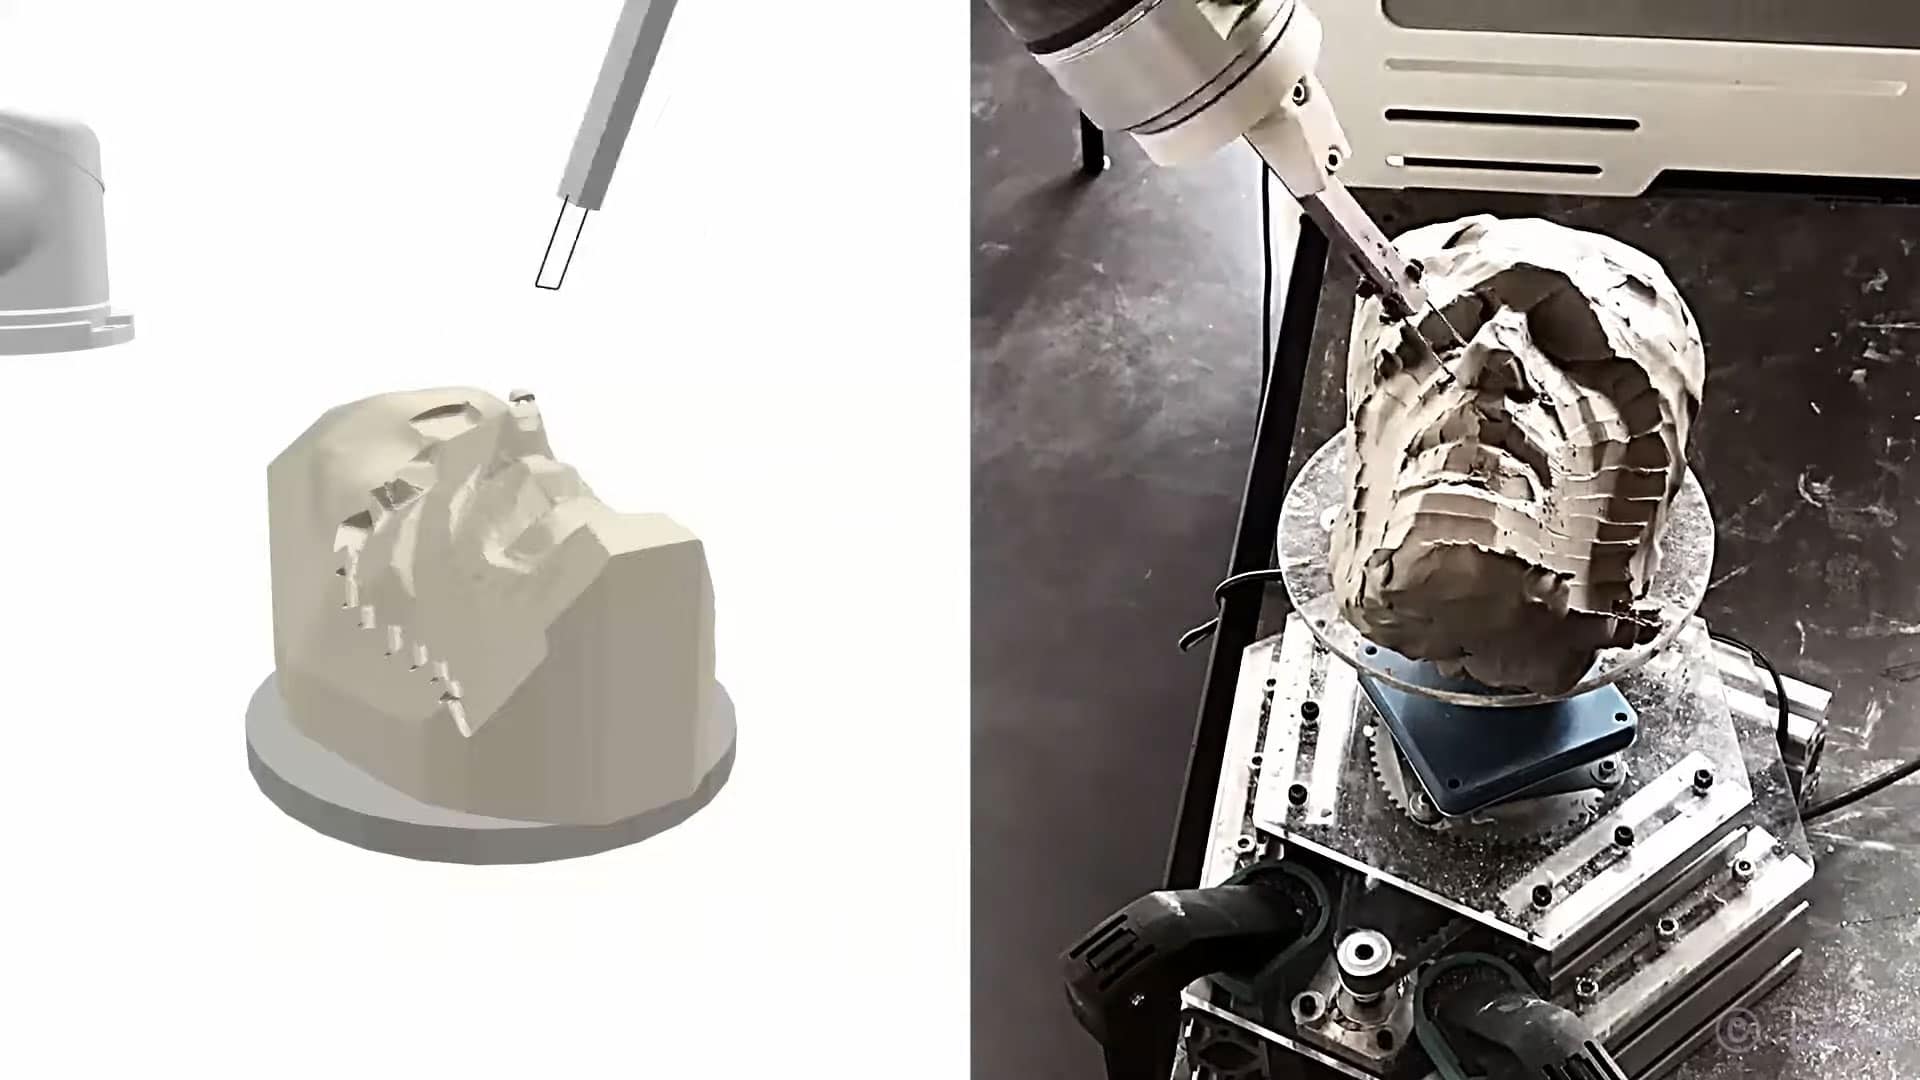 RobotSculptor uses a standard 6-axis robot arm to sculpt clay models.